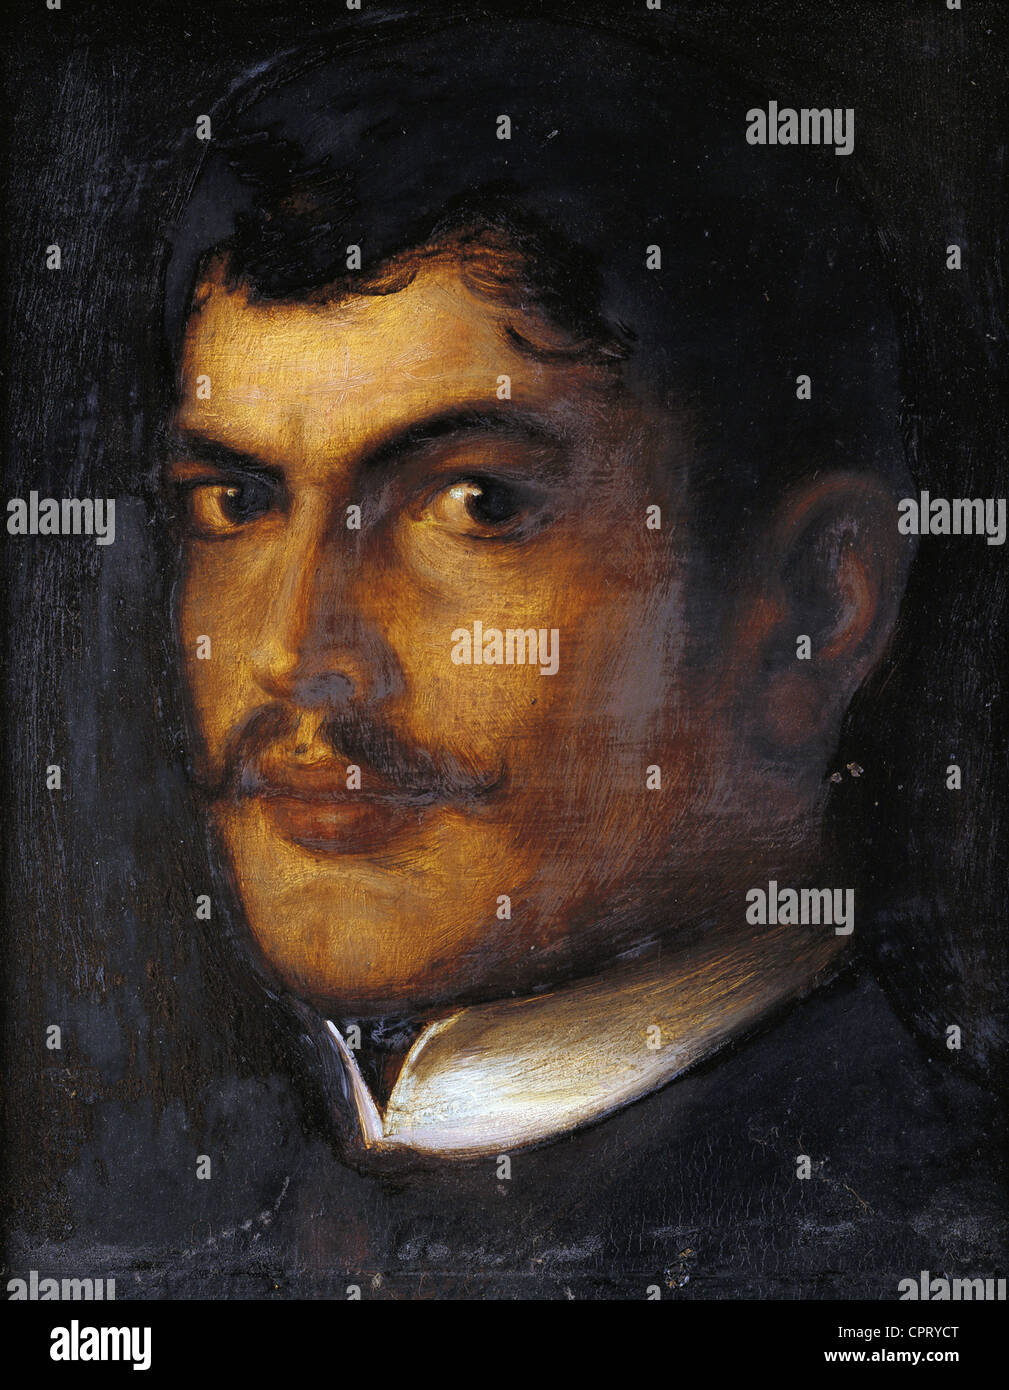 Stuck, Franz, 23.2.1863 - 30.8.1928, German painter, portrait, self-portrait, oil on wood panel, 30 x 23.4 cm, Museum Villa Stuck, Stock Photo